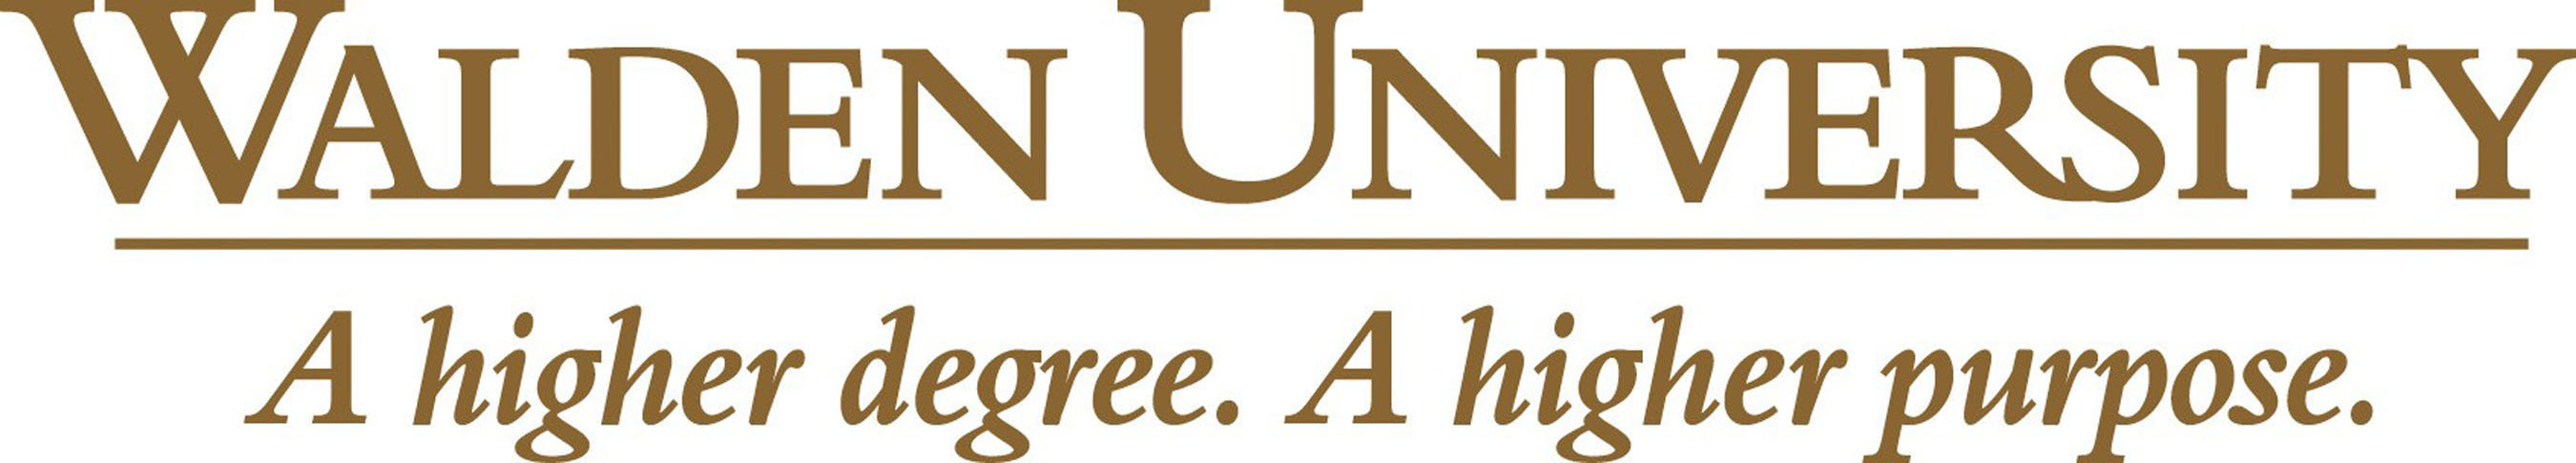 Walden University logo.